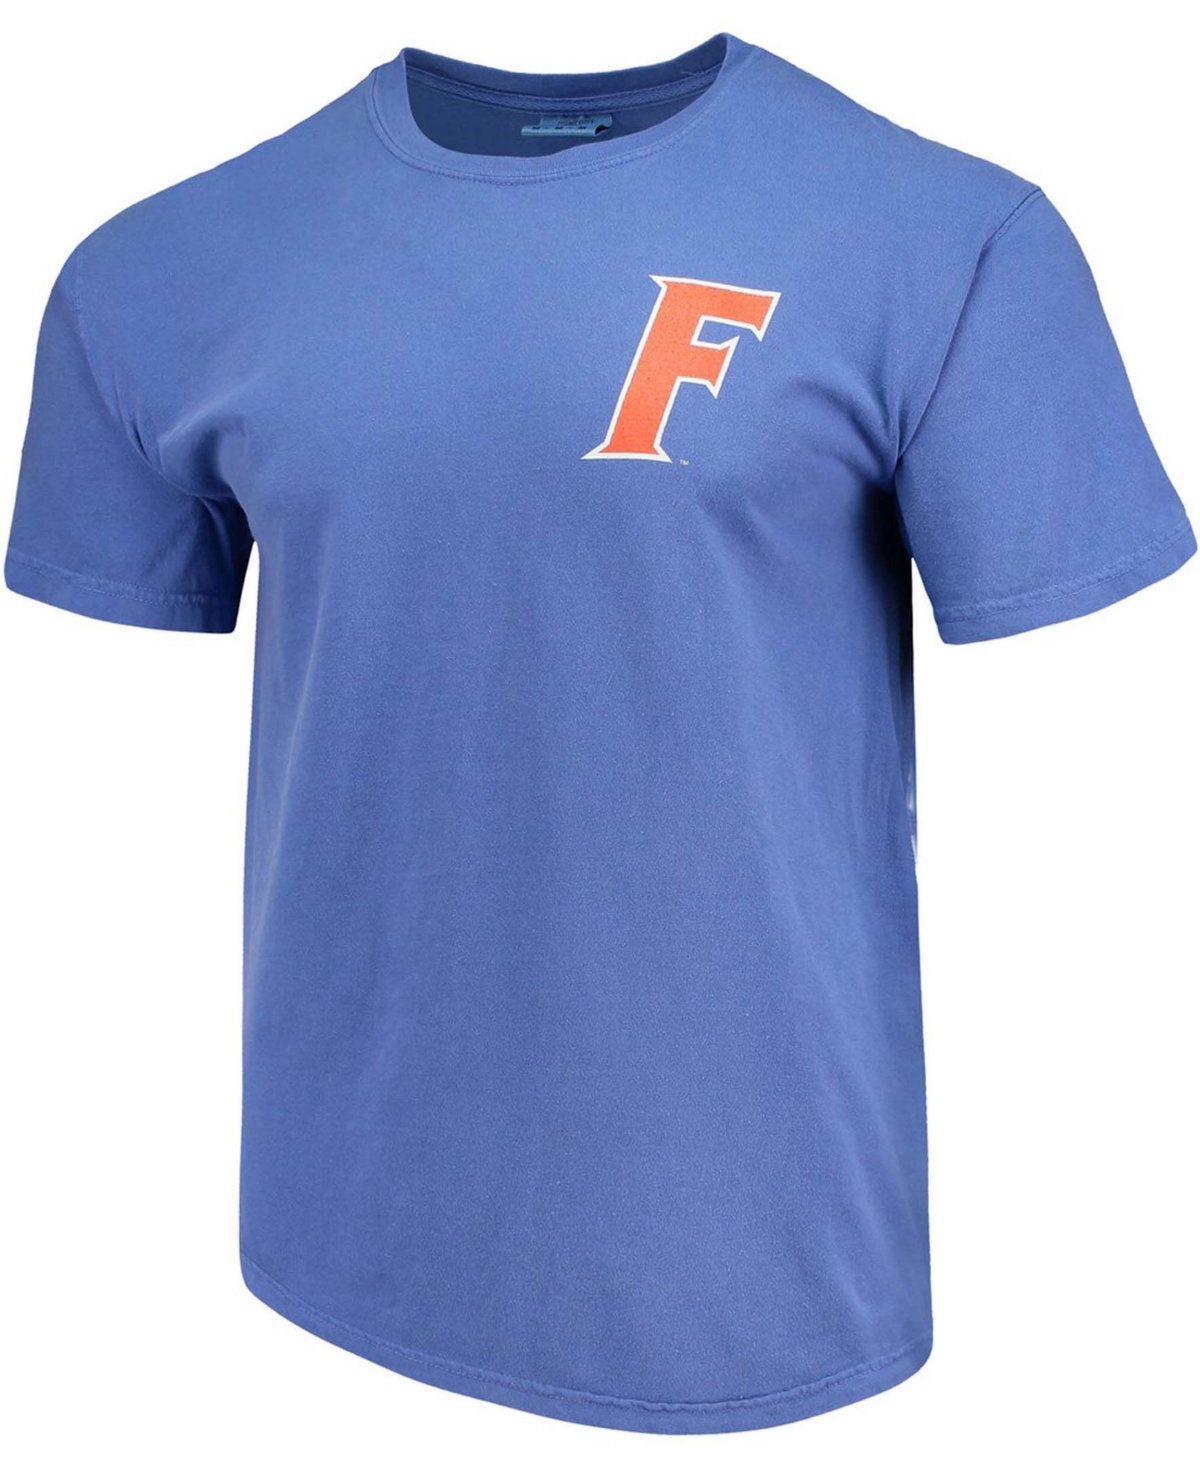 Men's Royal Florida Gators Baseball Flag Comfort Colors T-shirt - Royal